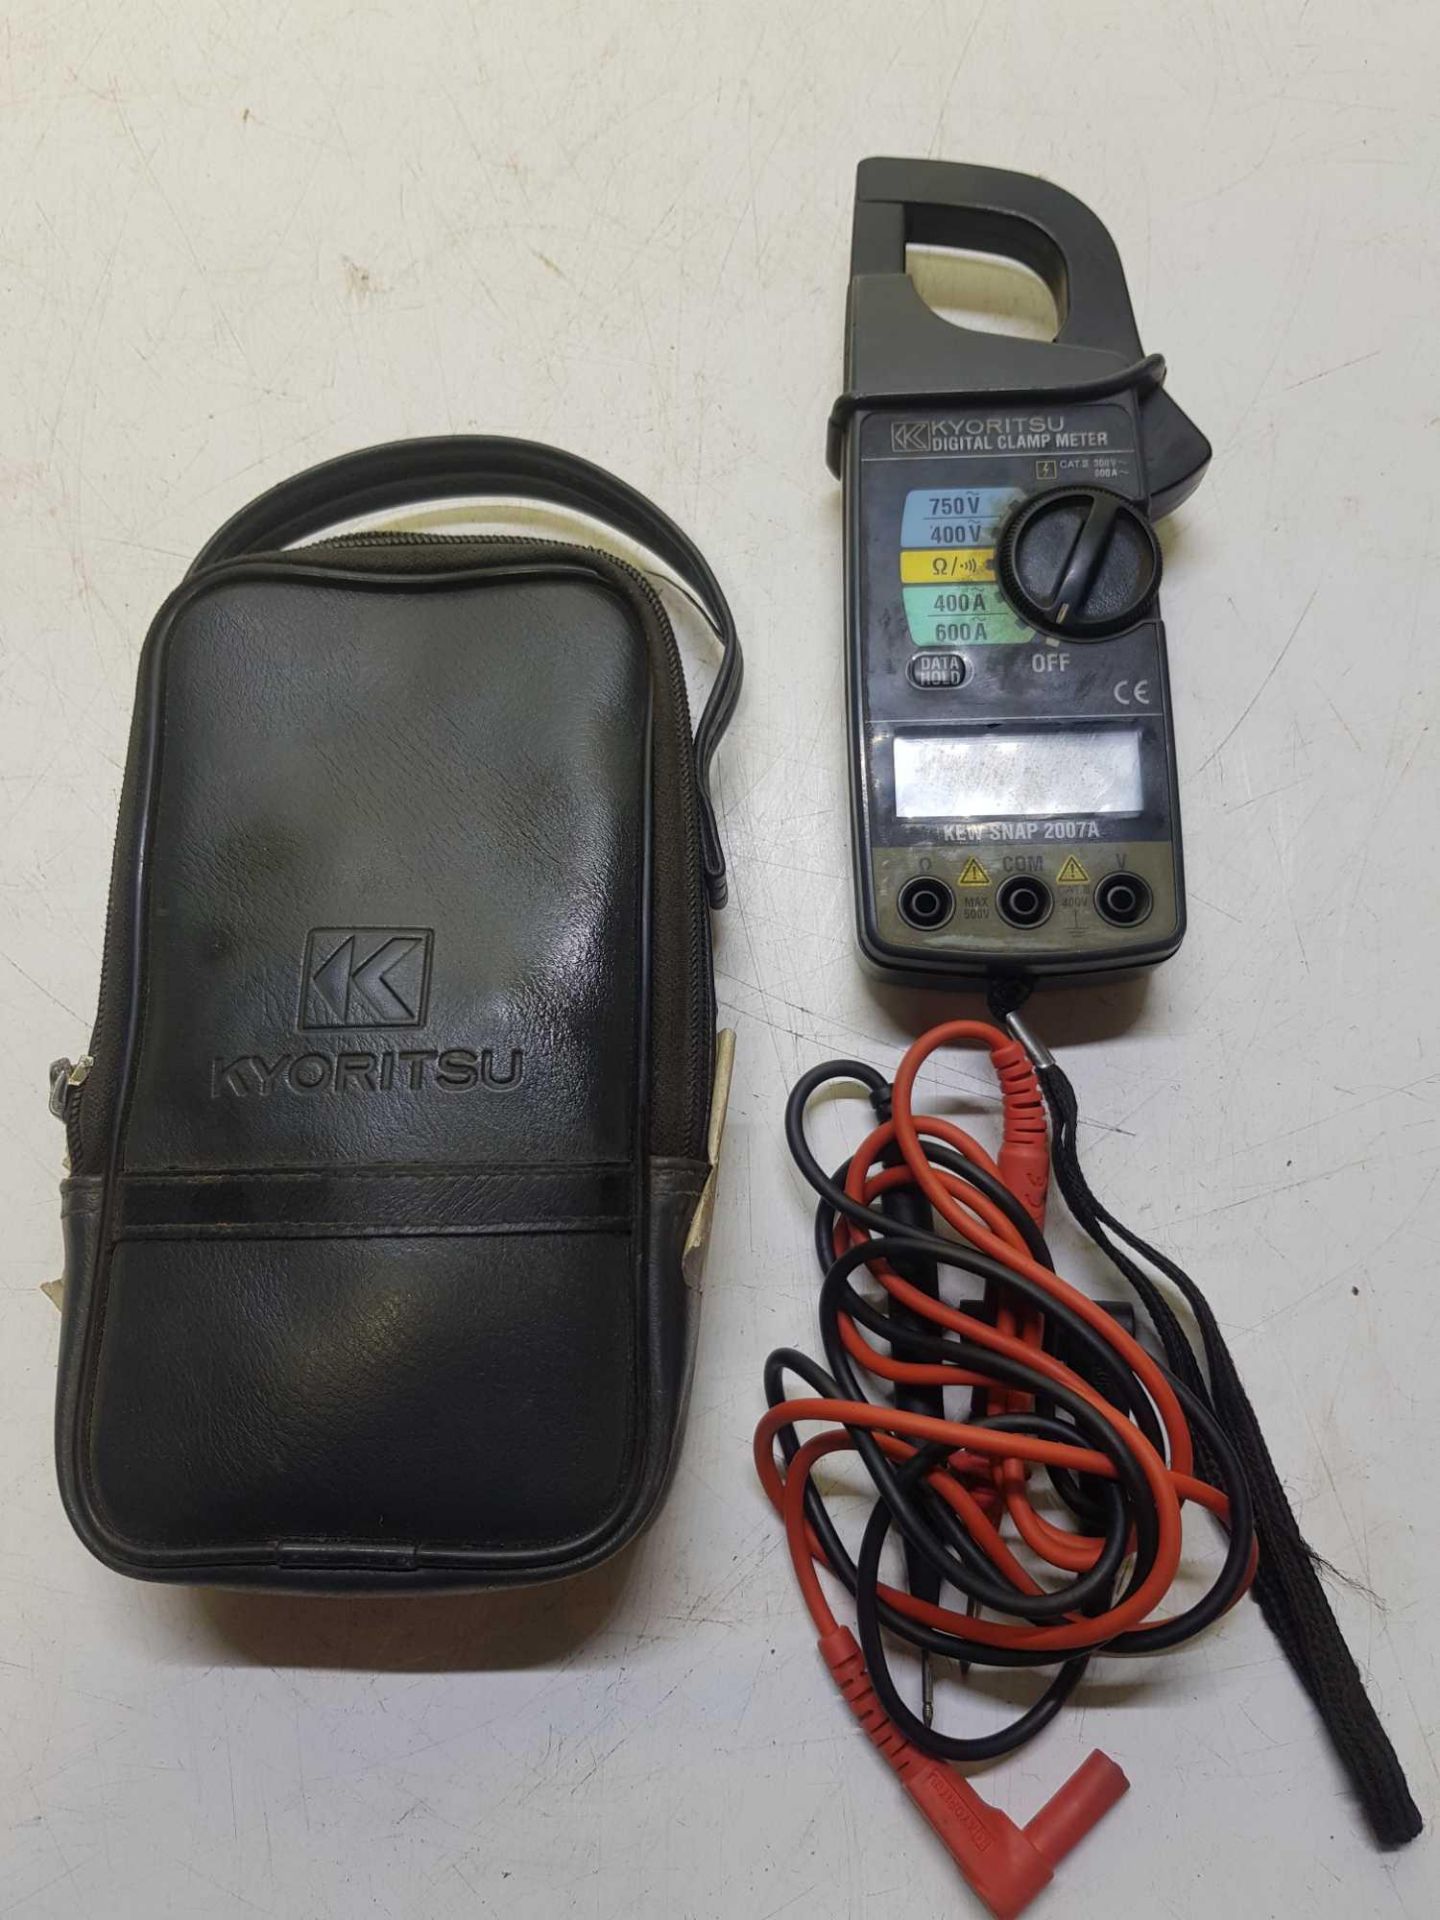 Kyoritsu digital clamp meter - Image 2 of 2